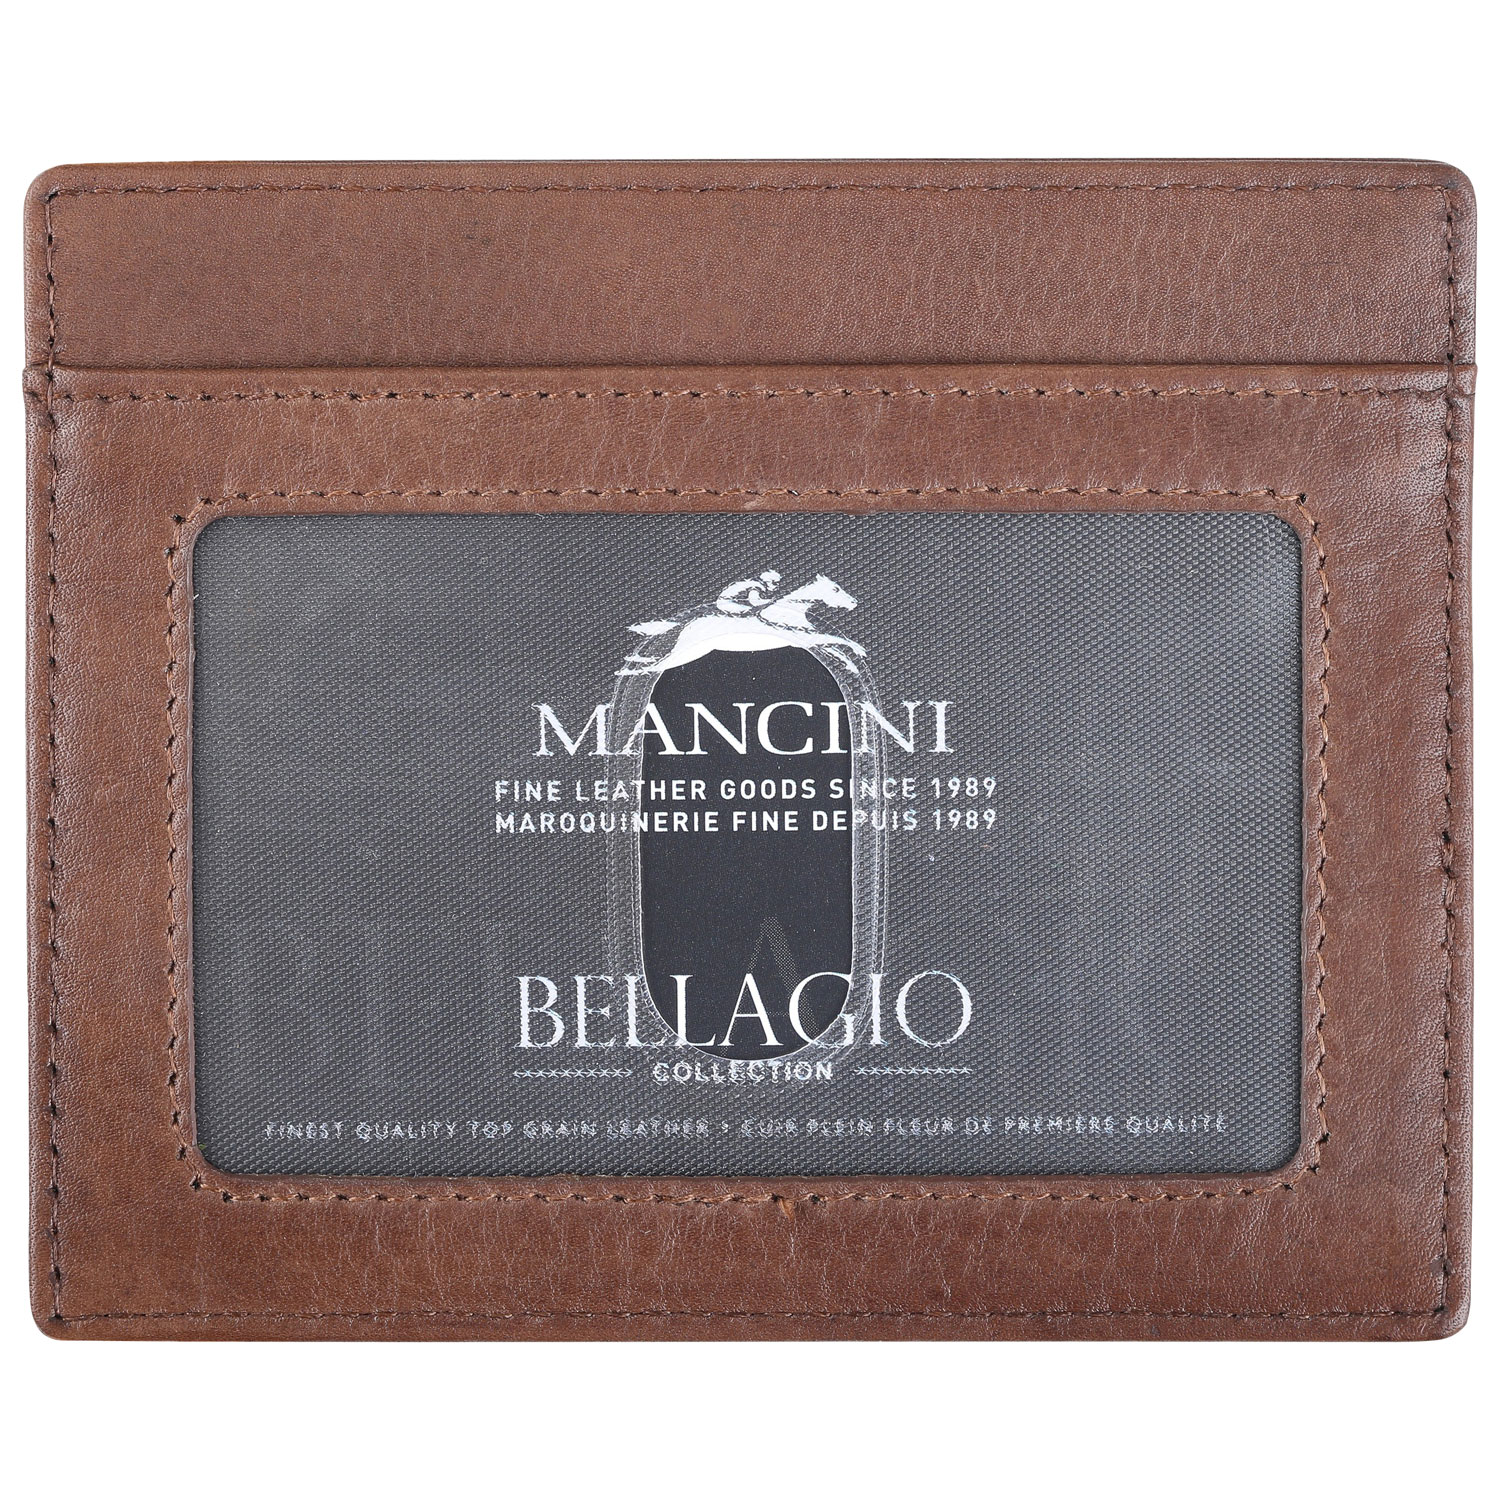 Mancini Bellagio RFID Genuine Leather Money Clip Wallet with ID Window & 4 Credit Card Slots - Brown